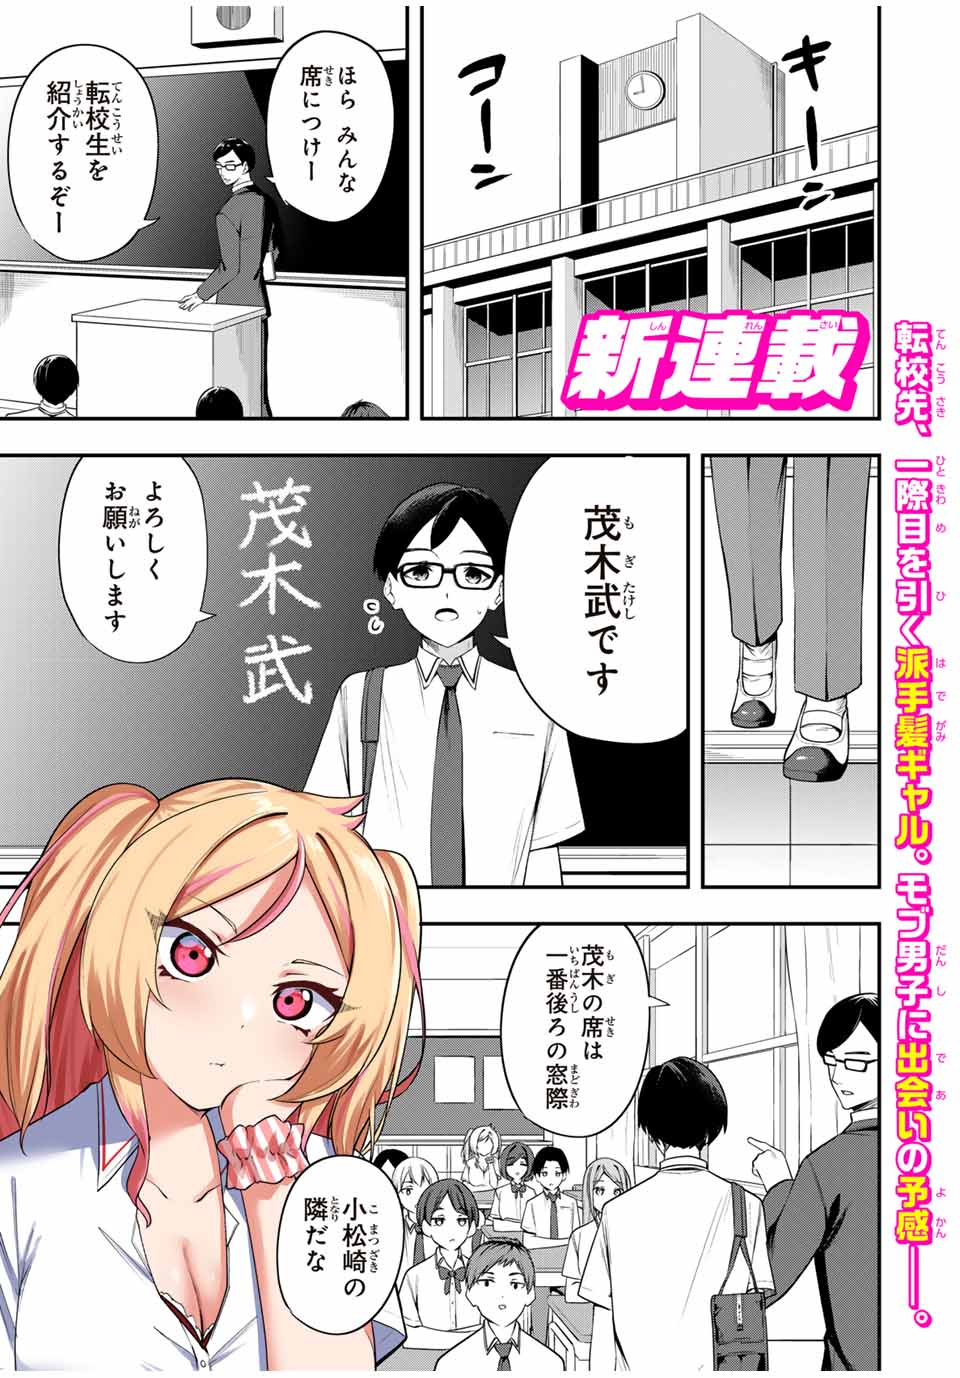 Heroine wa xx Okasegitai - Chapter 1 - Page 1